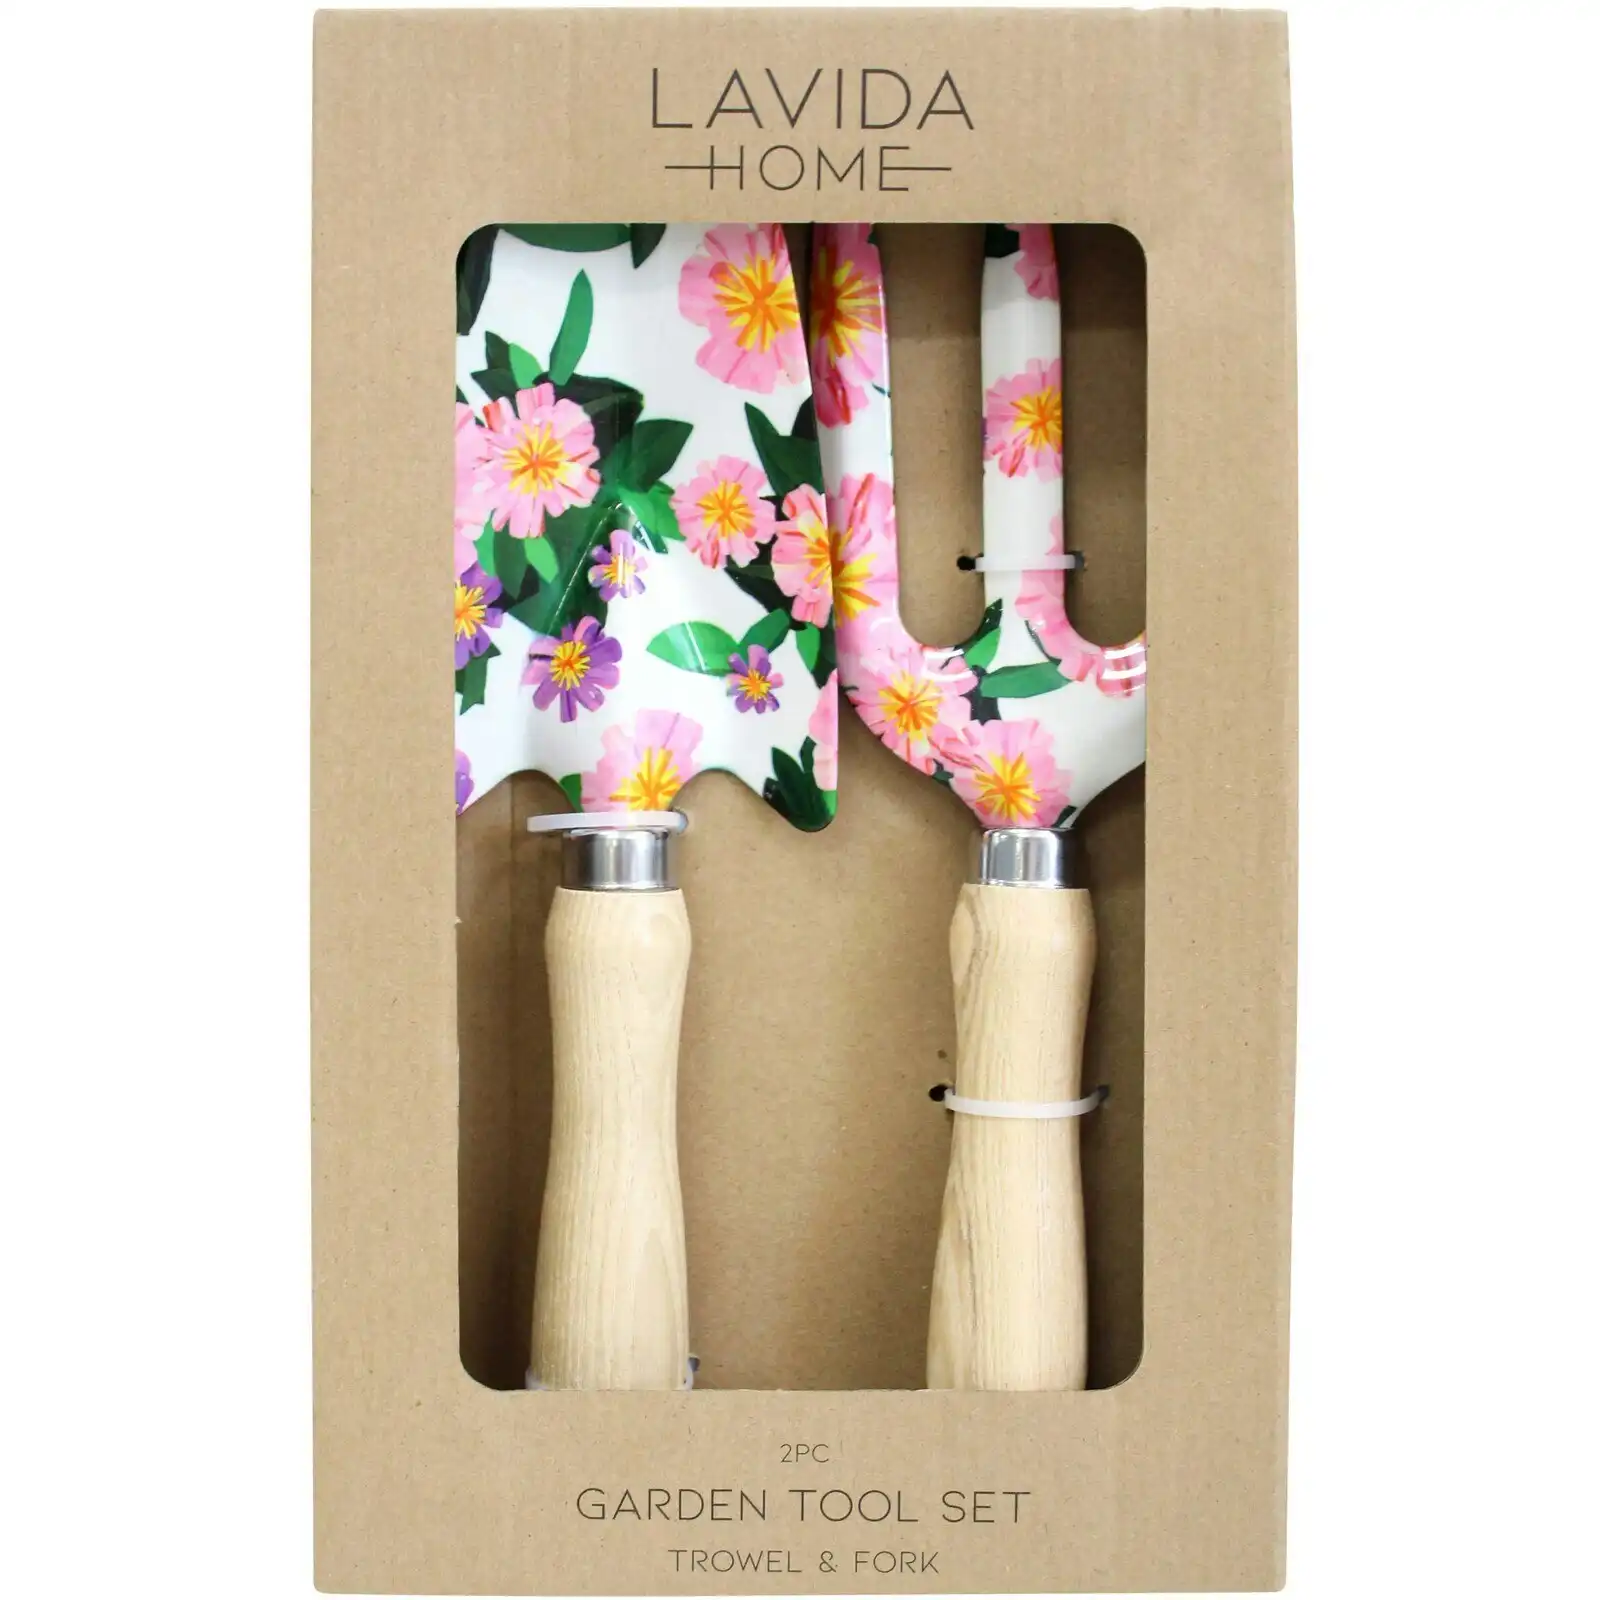 2pc LVD Spade/Trowel & Fork Garden Tool Set Home Planting/Gardening Hibiscus